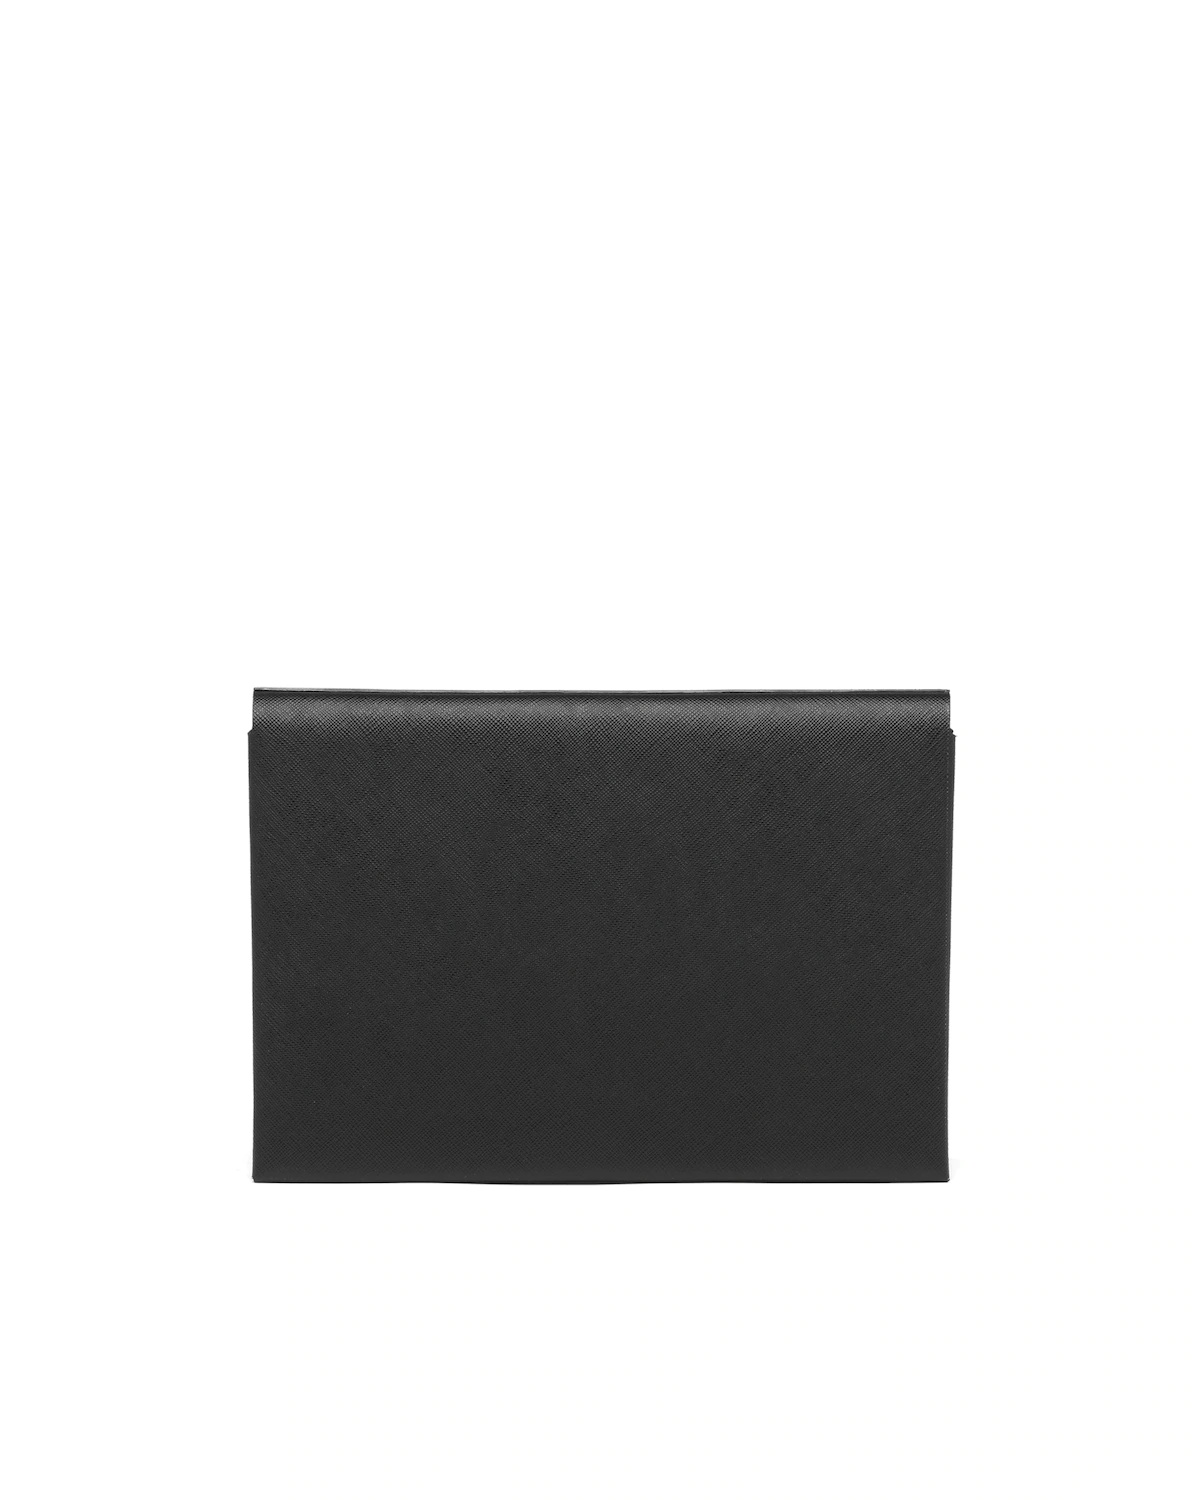 Large Saffiano leather document holder - 4